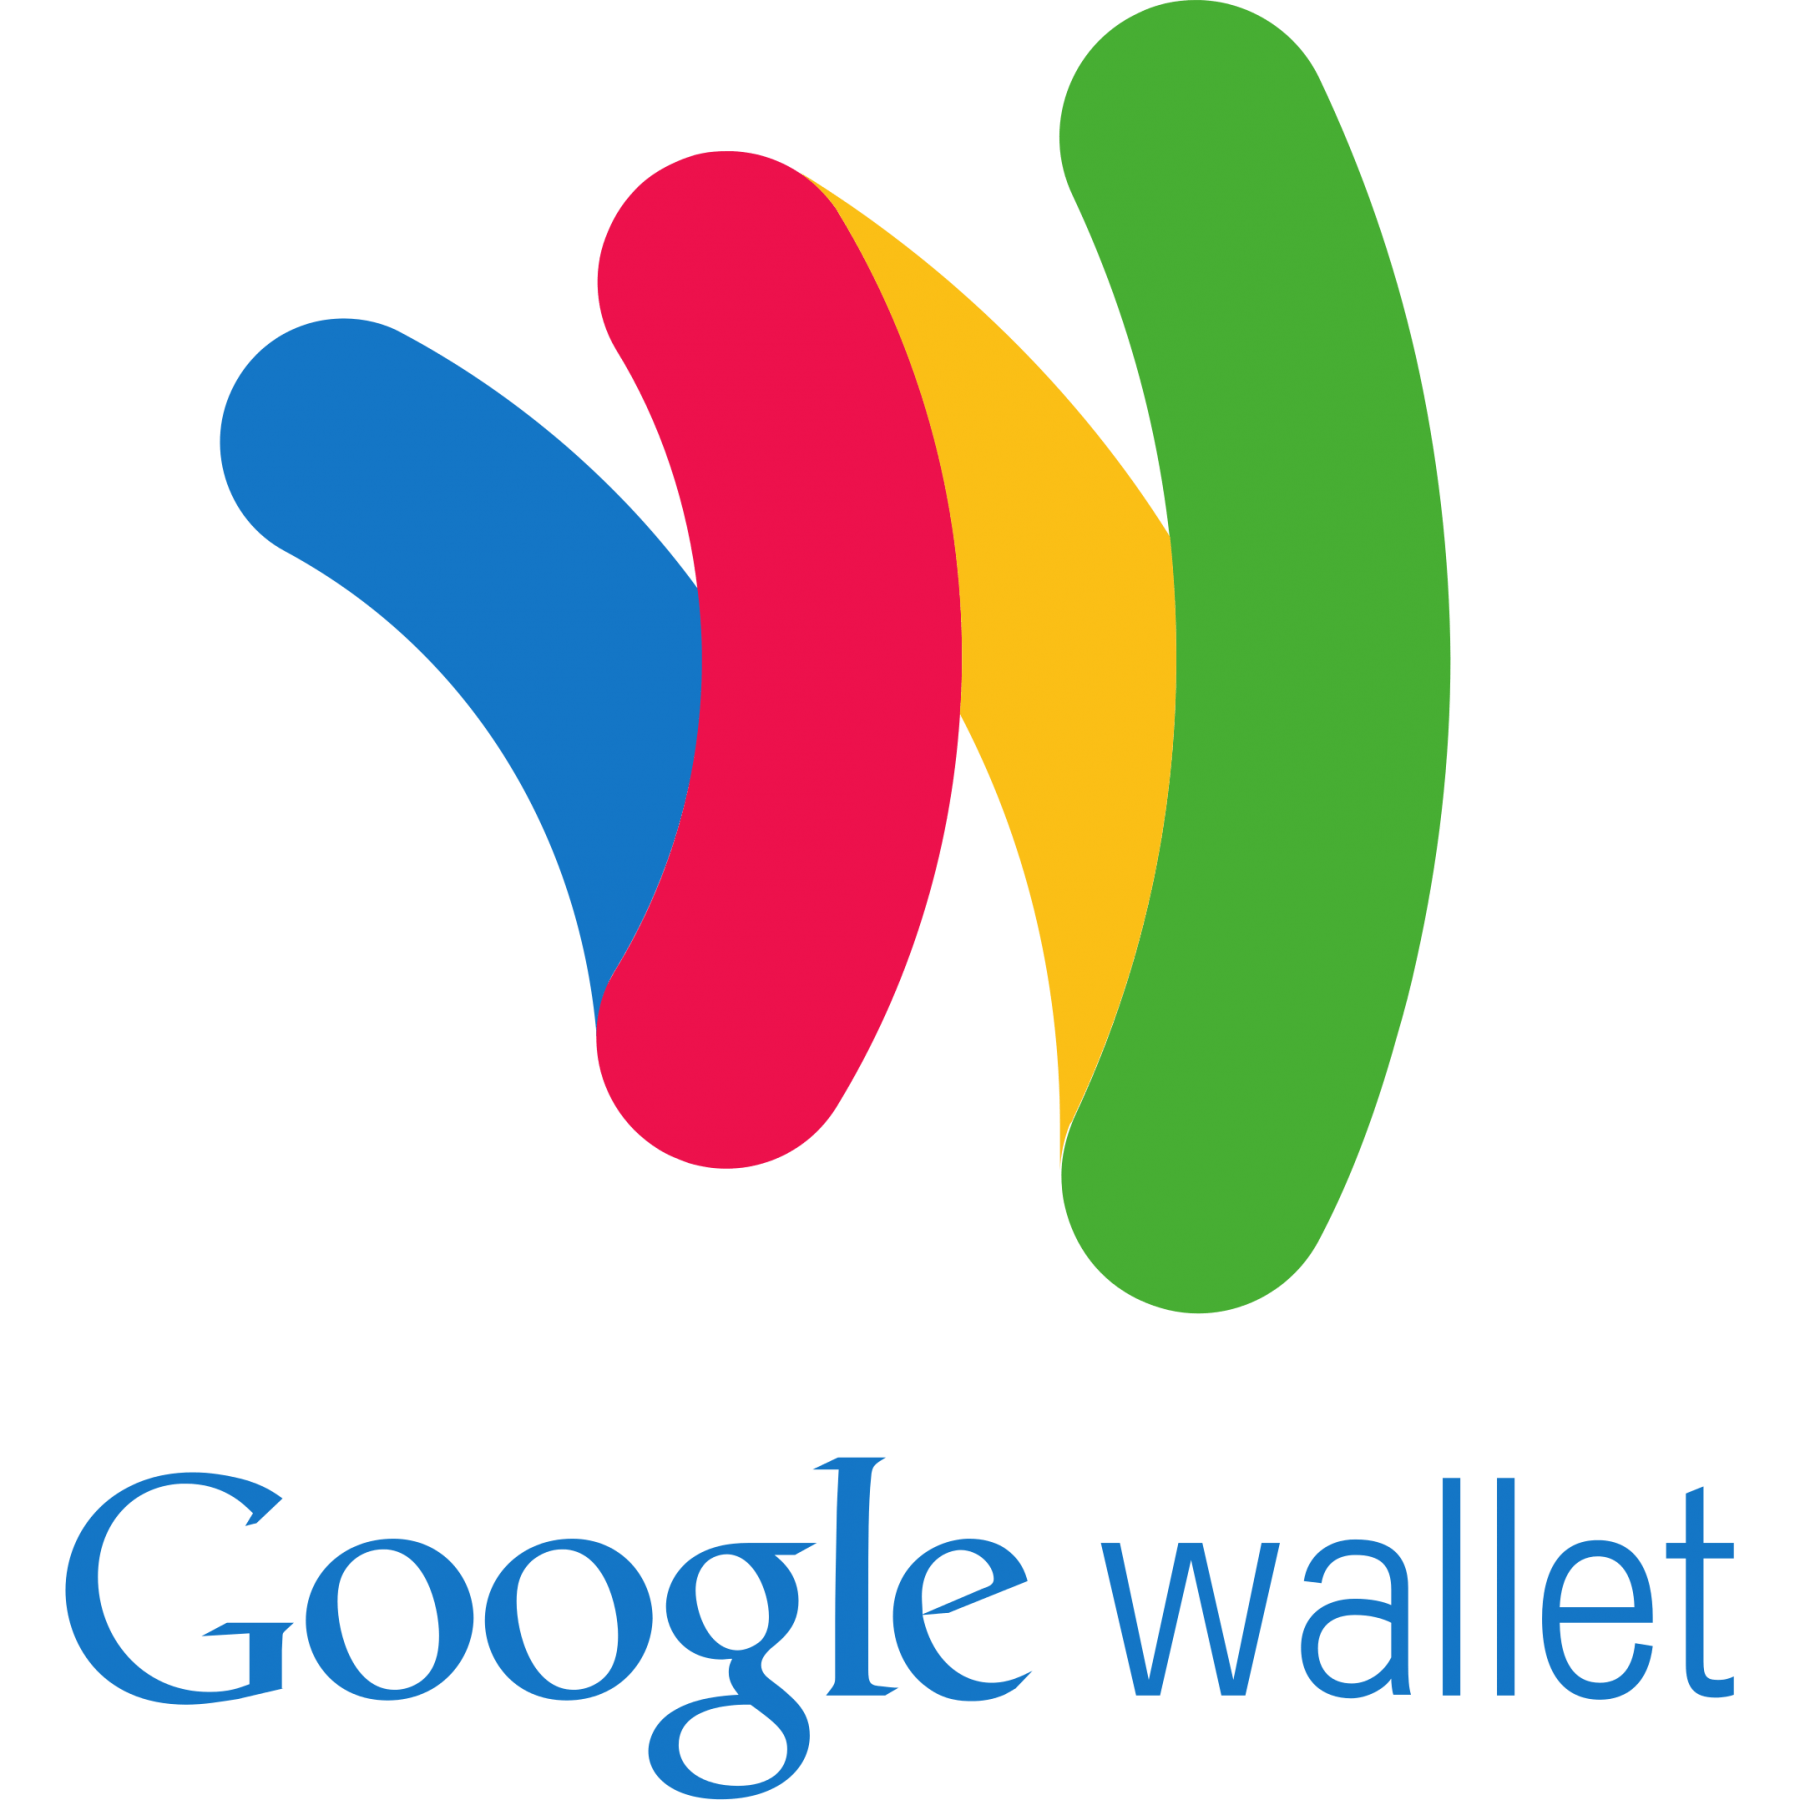 Google-Wallet-1.png